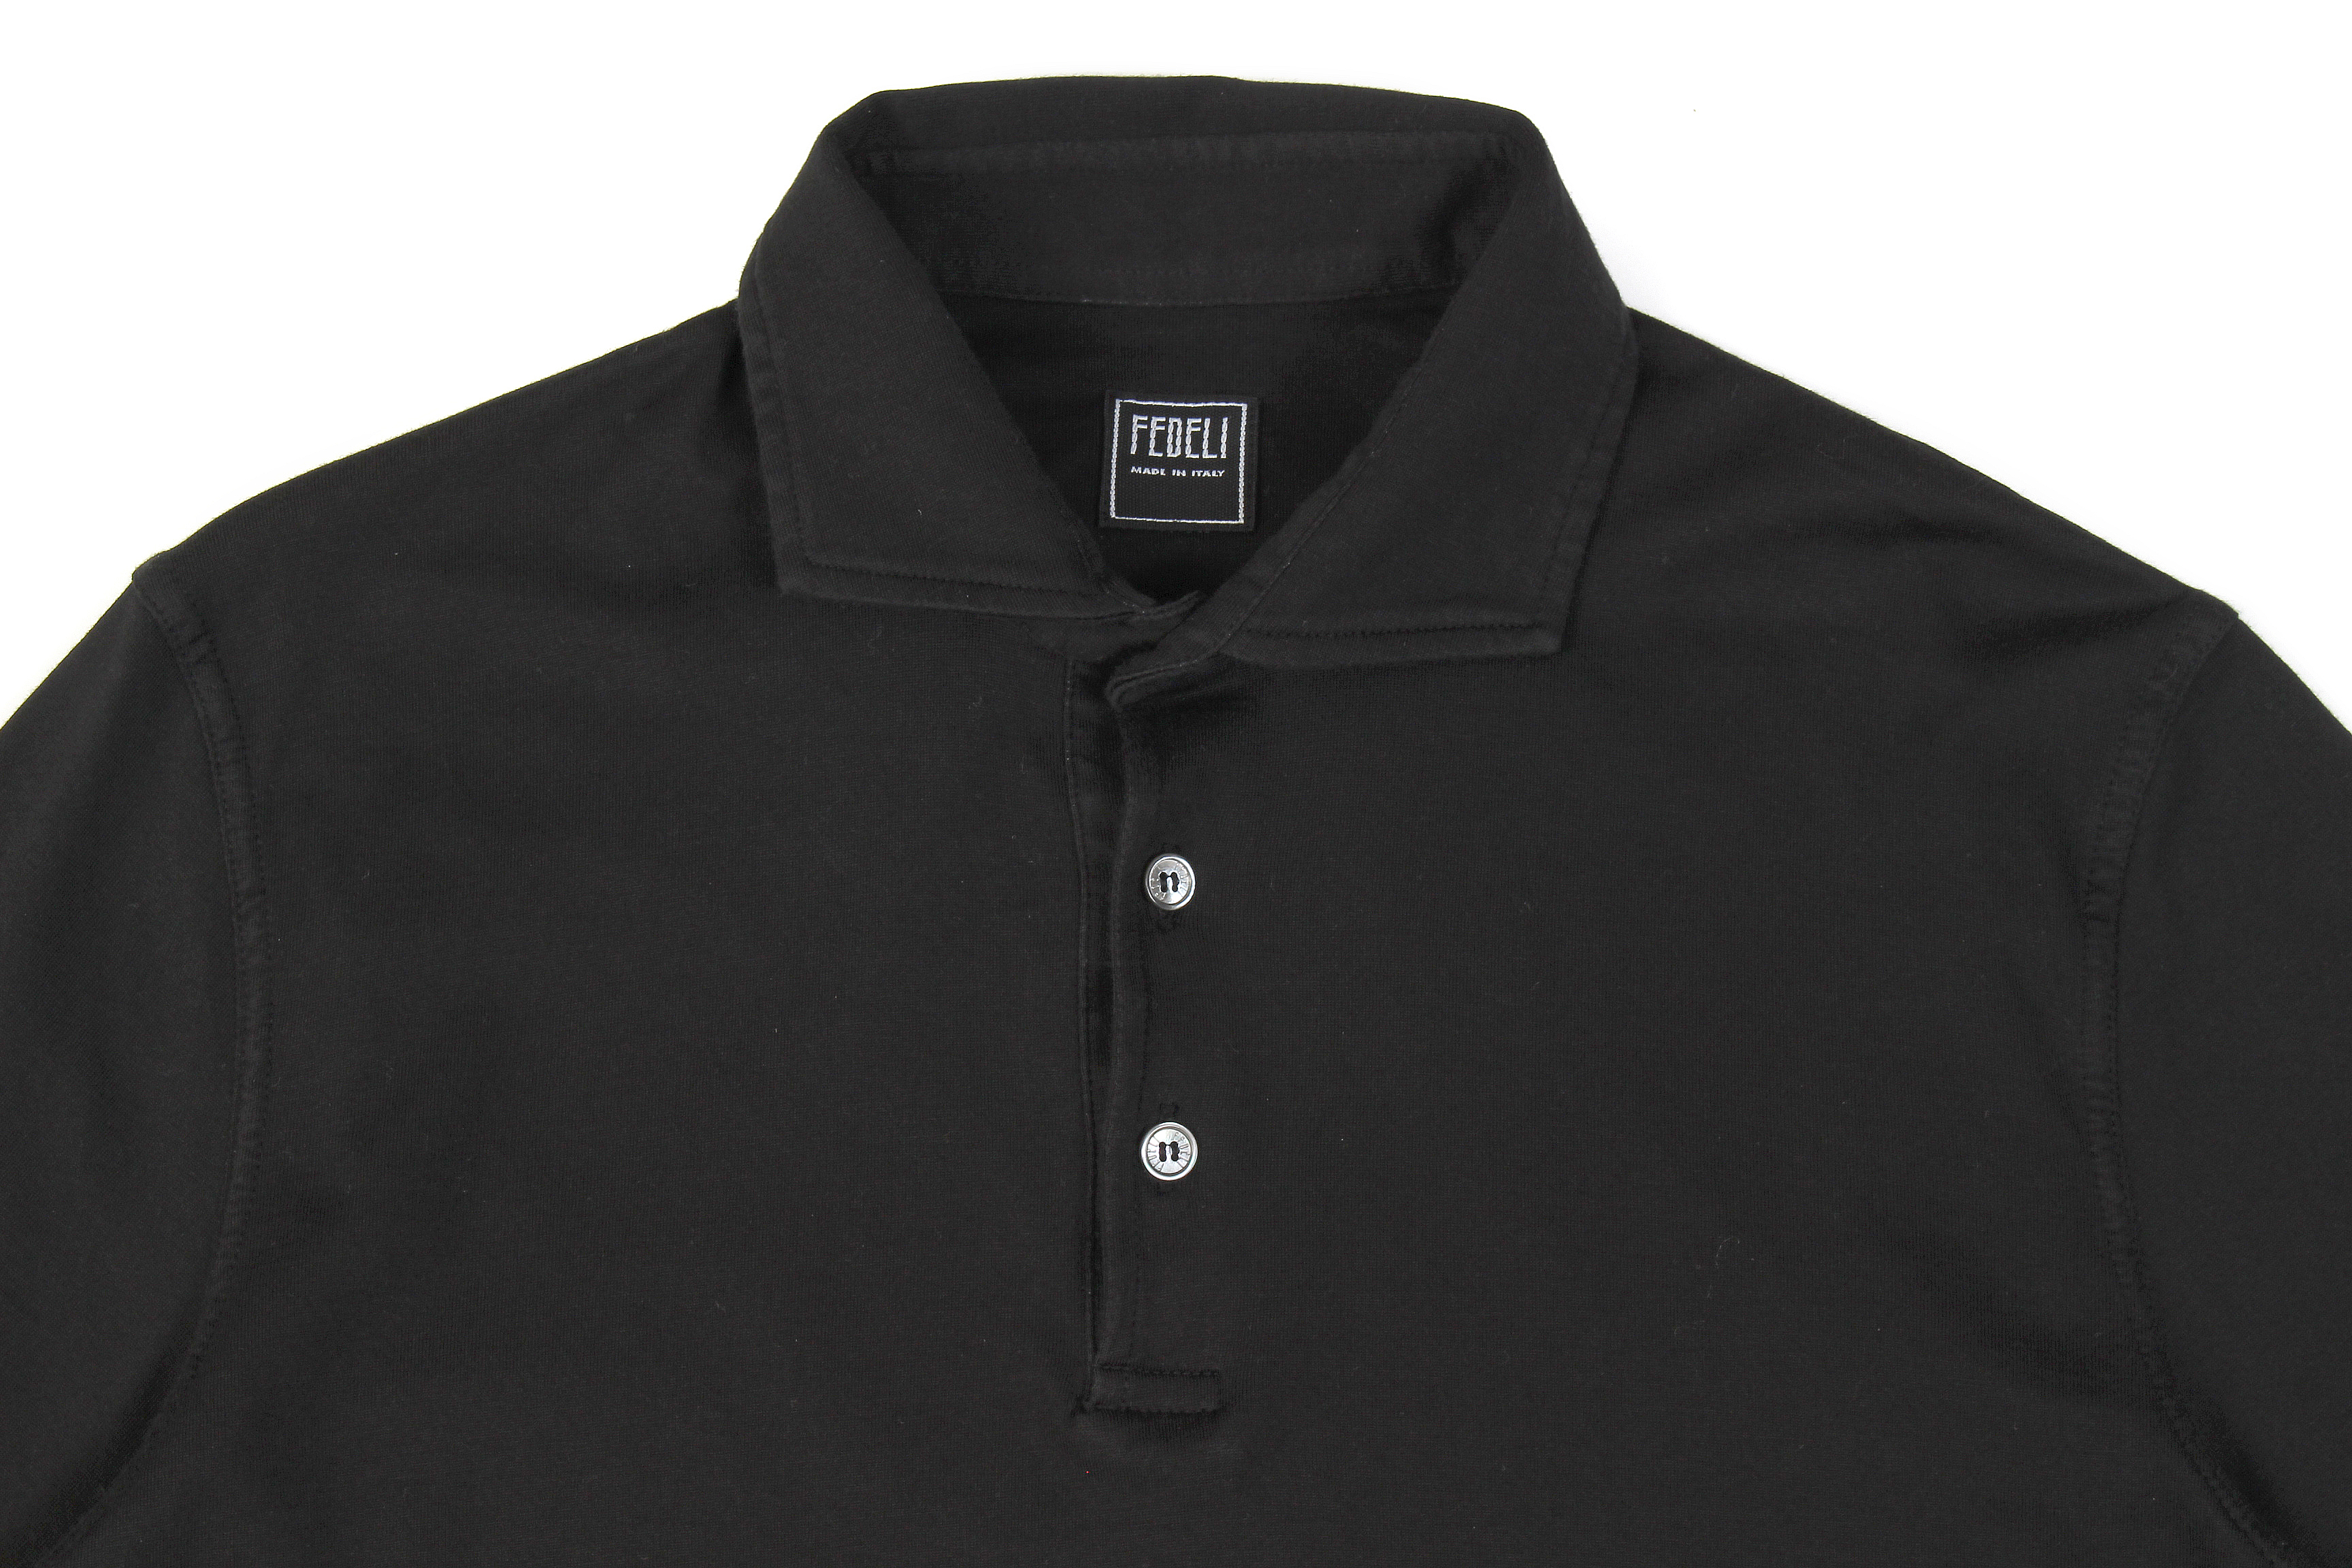 FEDELI (フェデリ) Polo Shirt GIZA45 (ポロシャツ) ギザコットン ポロシャツ BLACK (ブラック・36) made in italy (イタリア製) 2021 春夏新作 愛知 名古屋 Alto e Diritto altoediritto アルトエデリット 半袖ポロシャツ